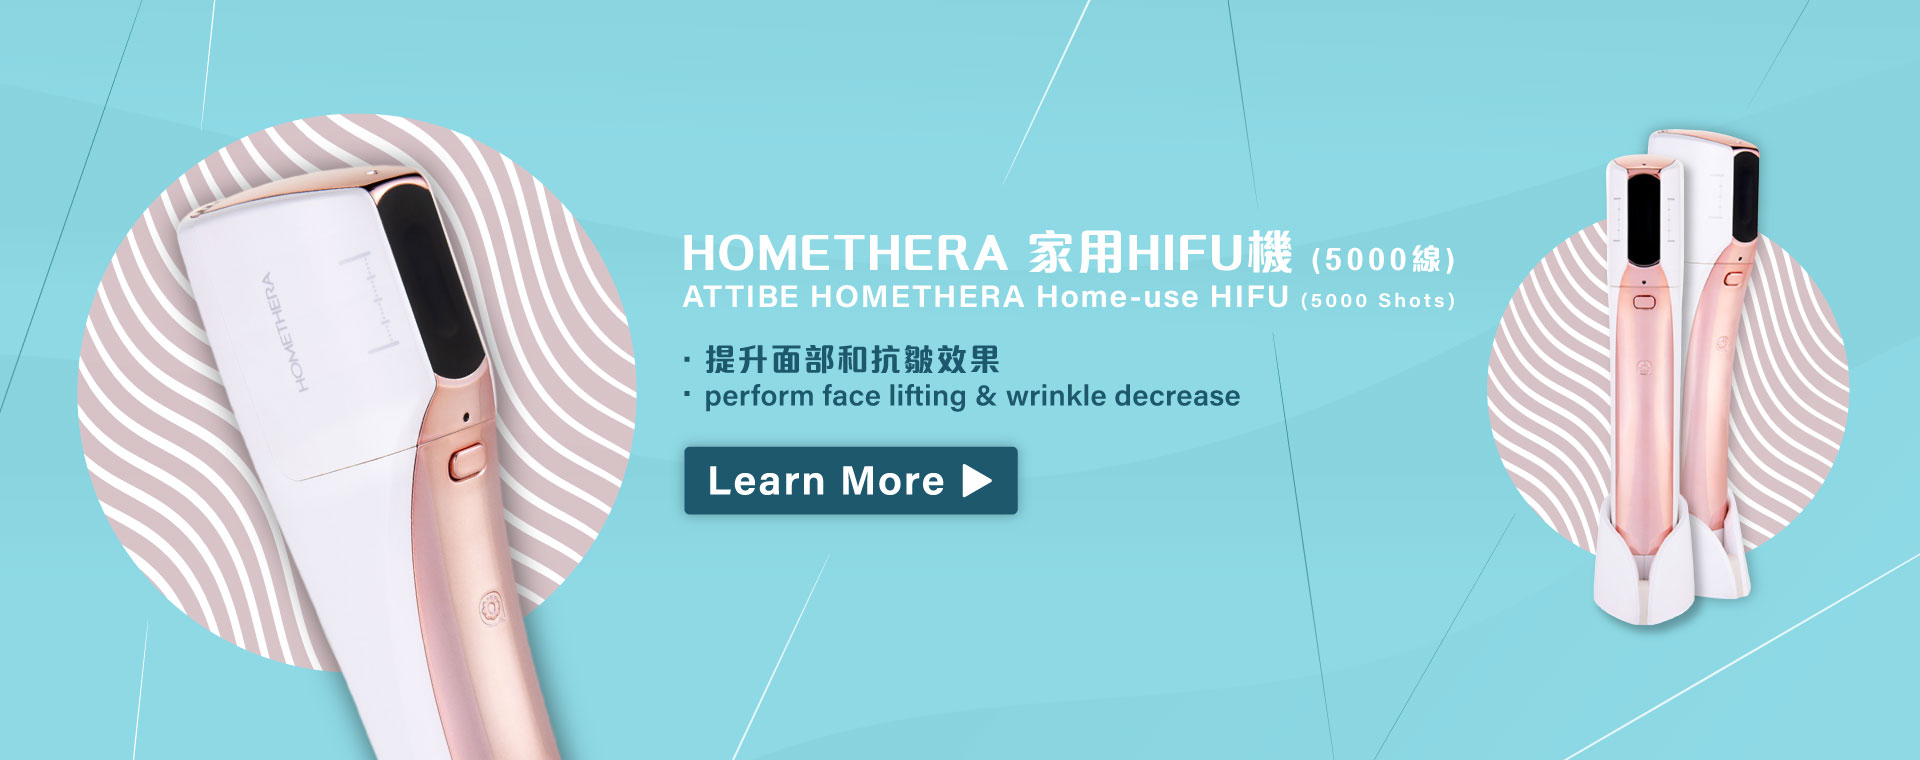 Attibe homethera home use hifu